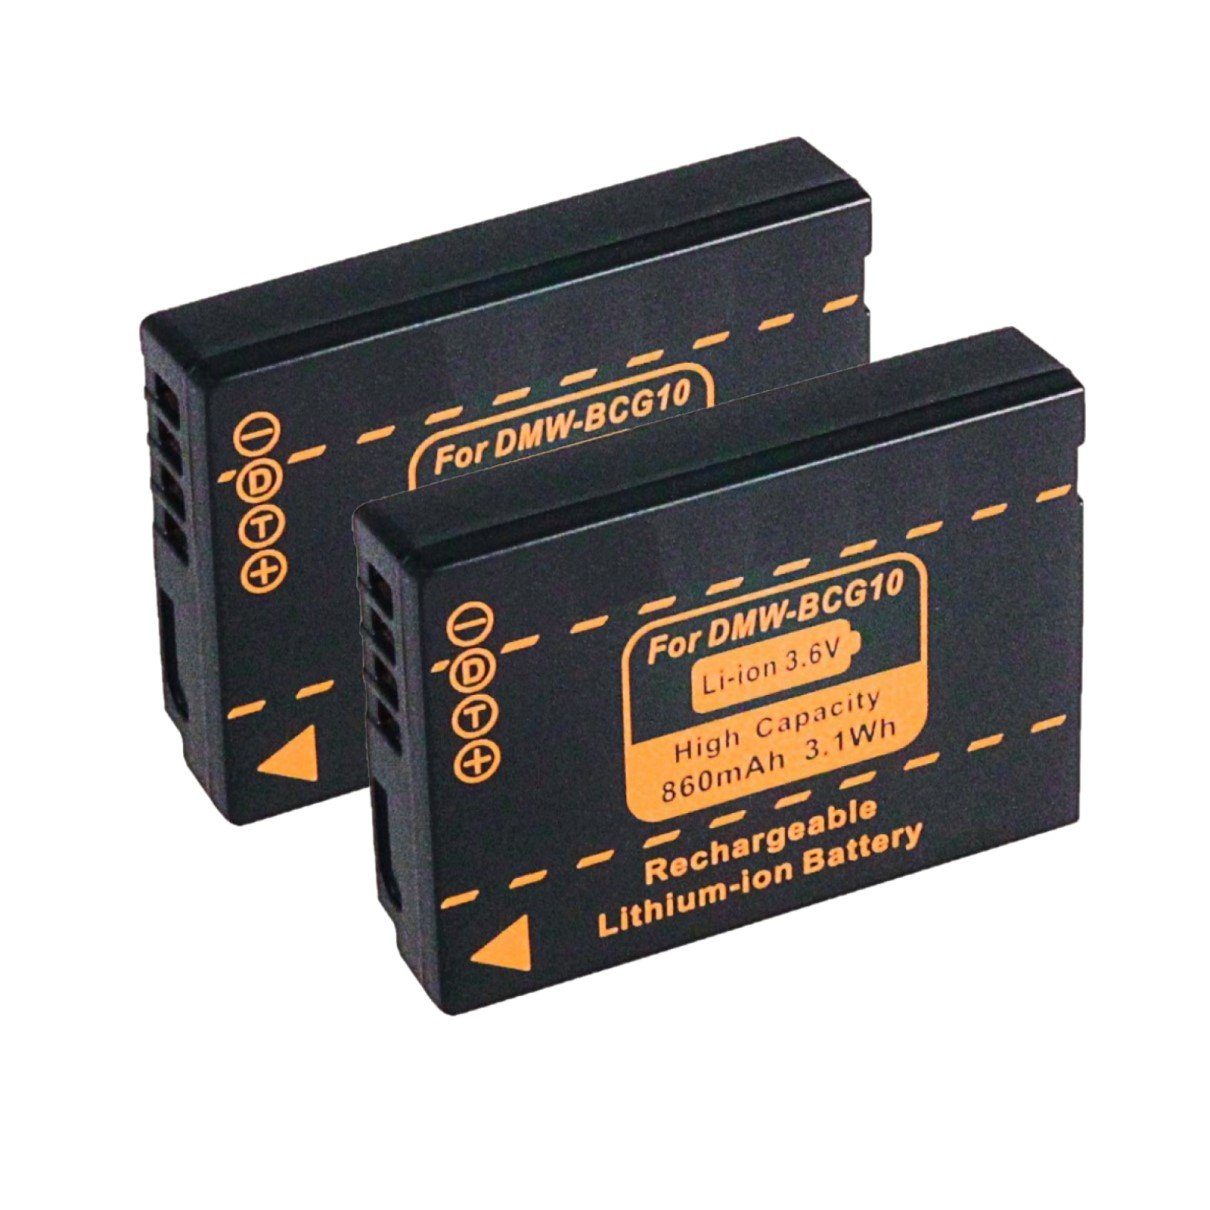 GOLDBATT 2x Akku für Panasonic DMW-BCG10E DMW-BCG10 Lumix TZ18 TZ22 TZ25 TZ31 ZX1 ZX3 DMC-TZ6 Kamera-Akku Ersatzakku 860 mAh (3,6 V, 2 St), 100% kompatibel durch maßgefertigte Passform inklusive Überhitzungsschutz